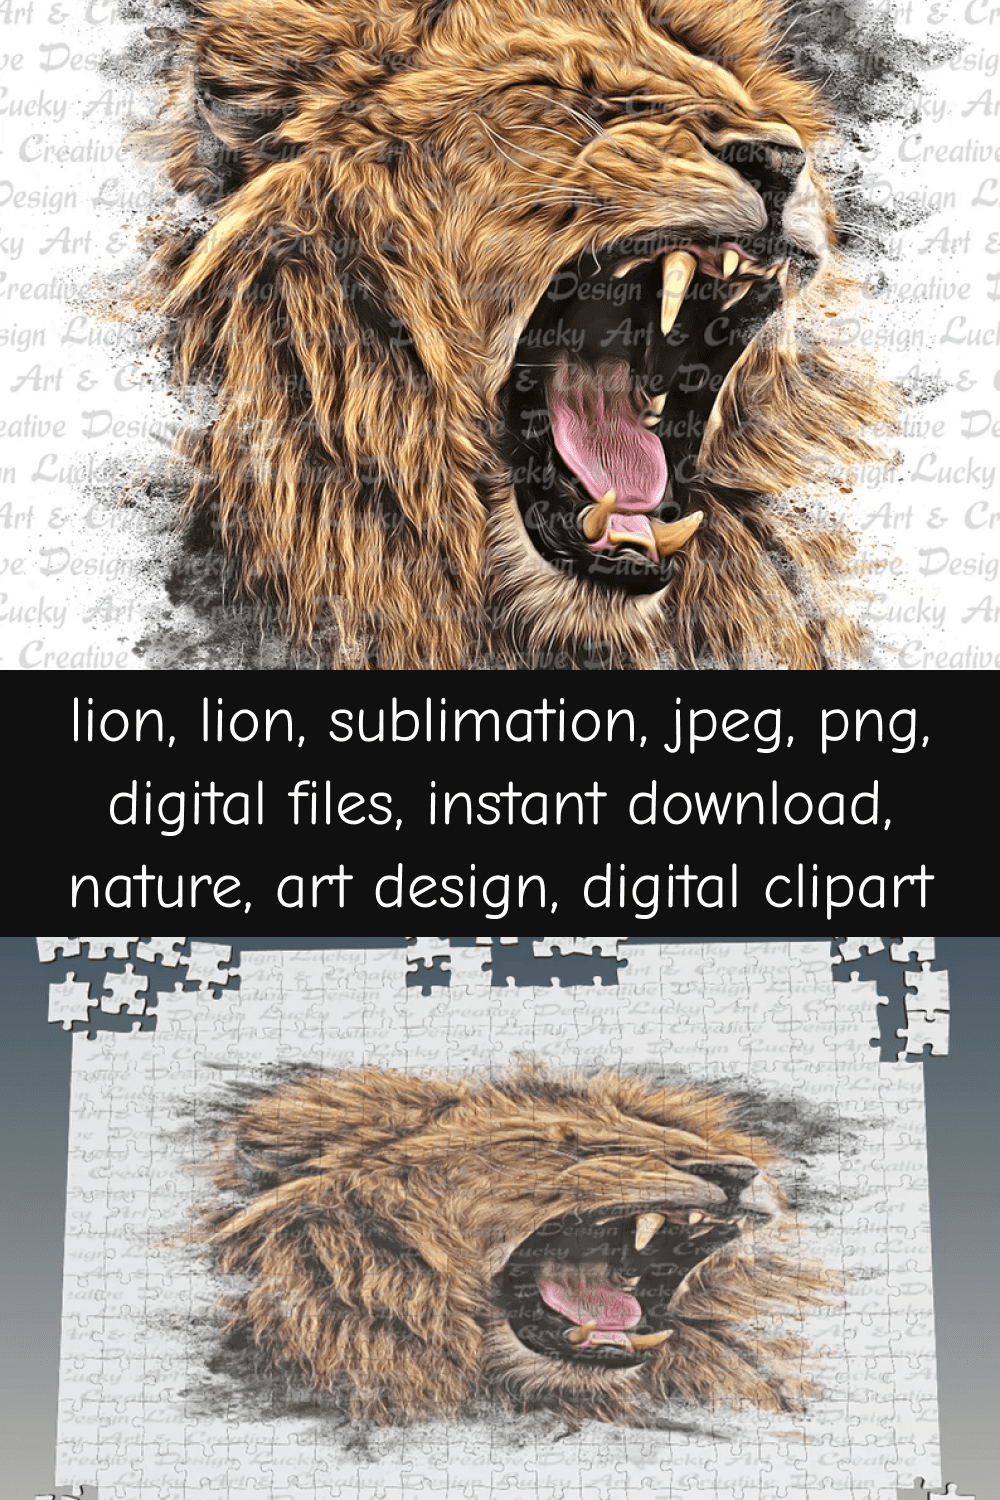 Lion Art Design.